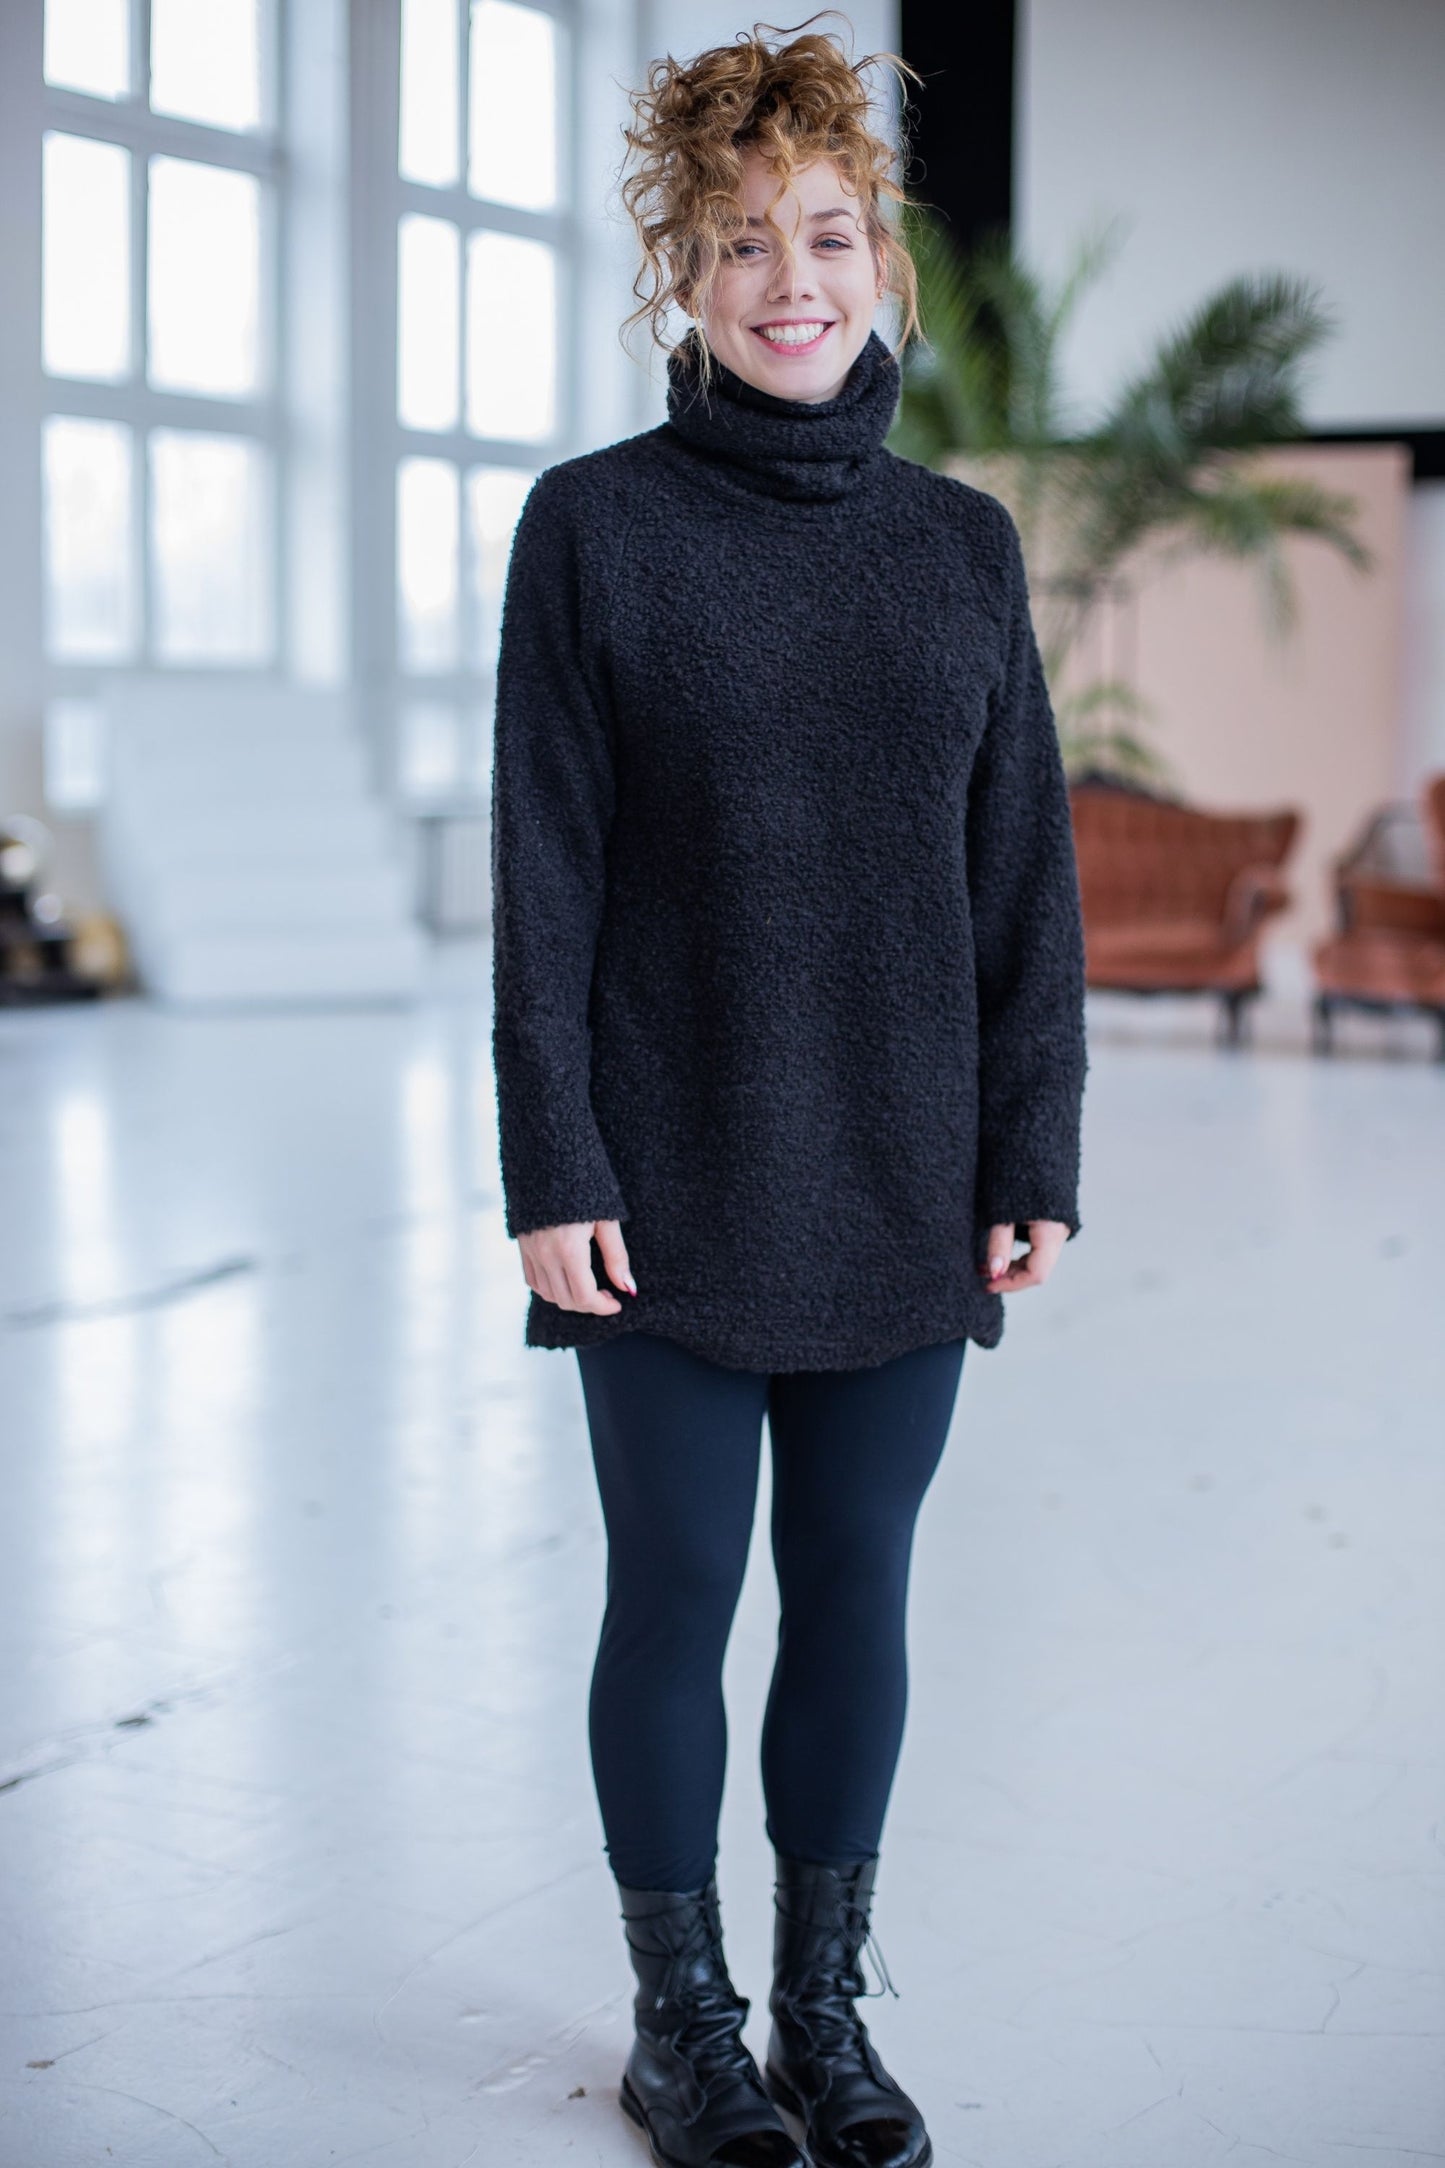 Black half-length sweater made of wool fabric